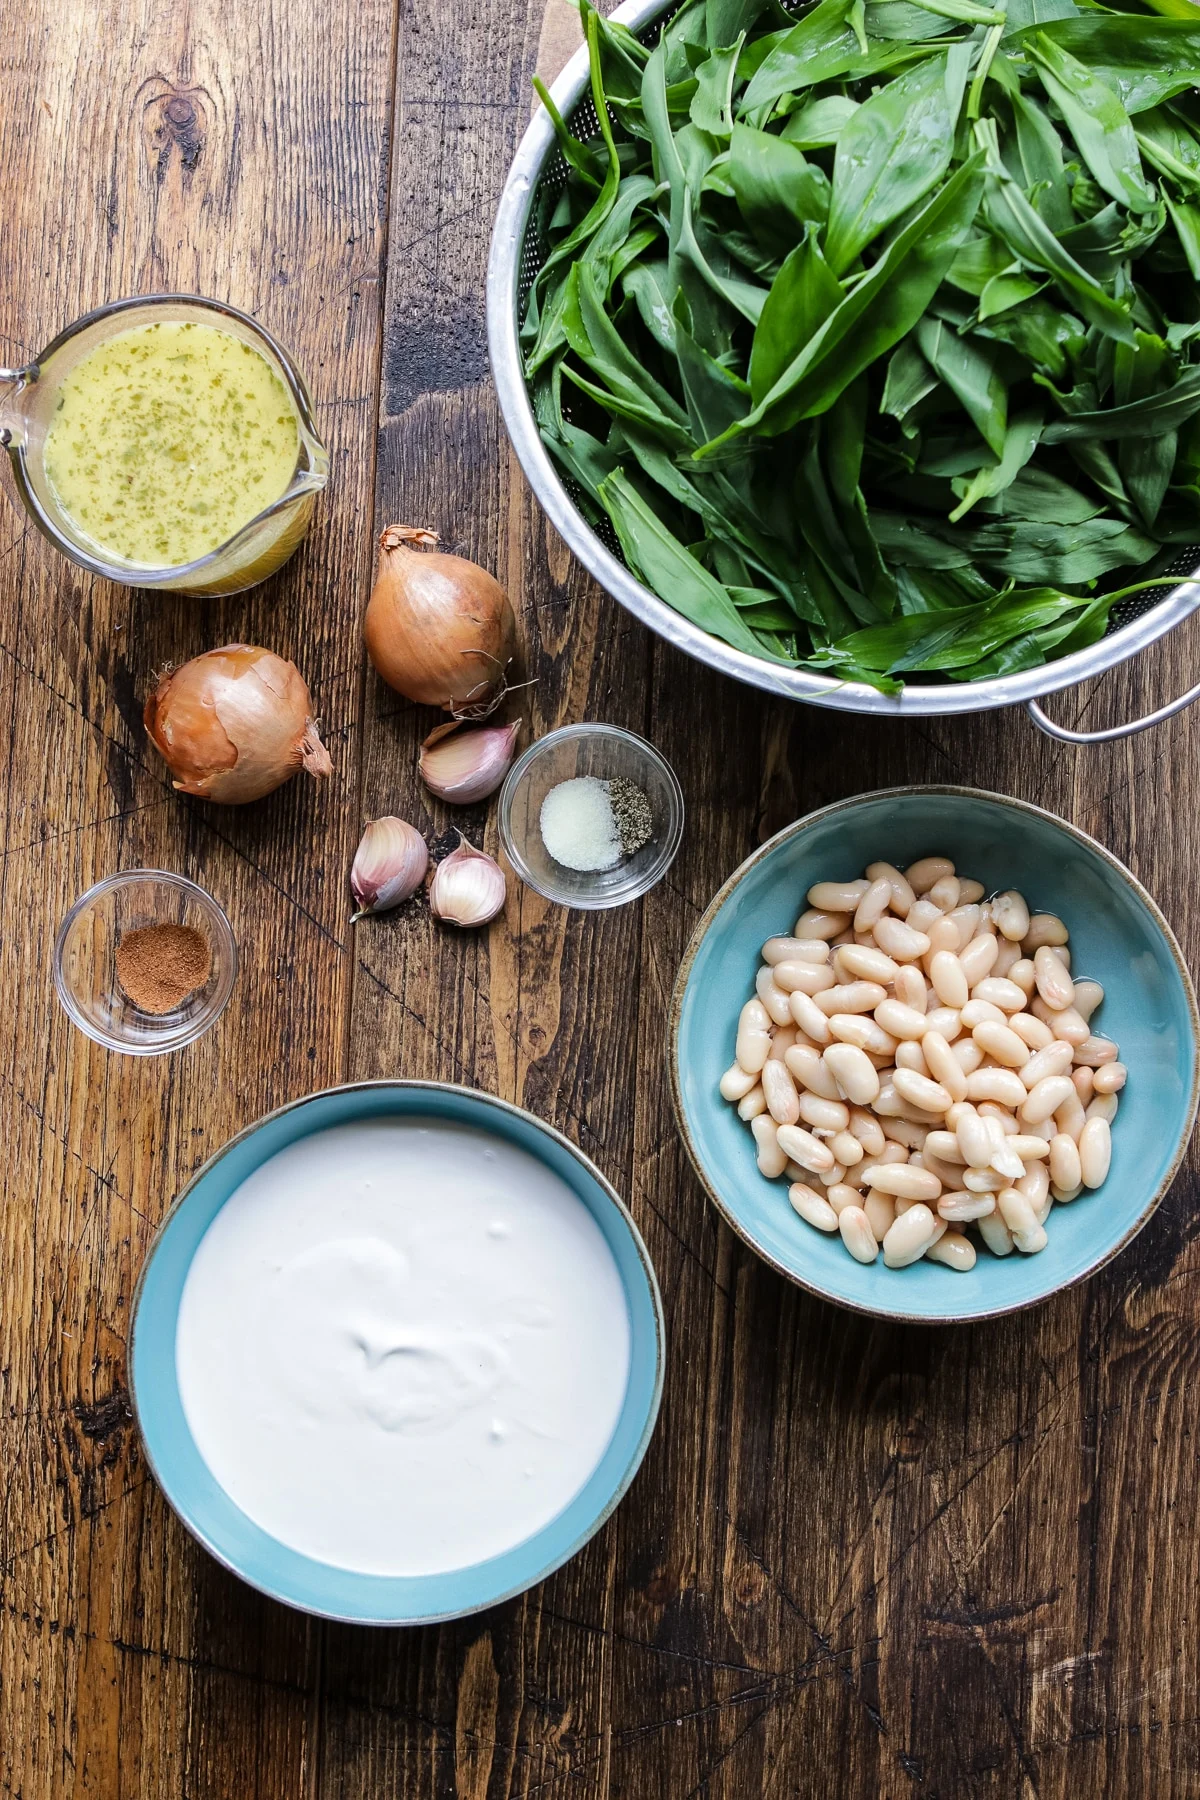 Ingredients for wild garlic soup